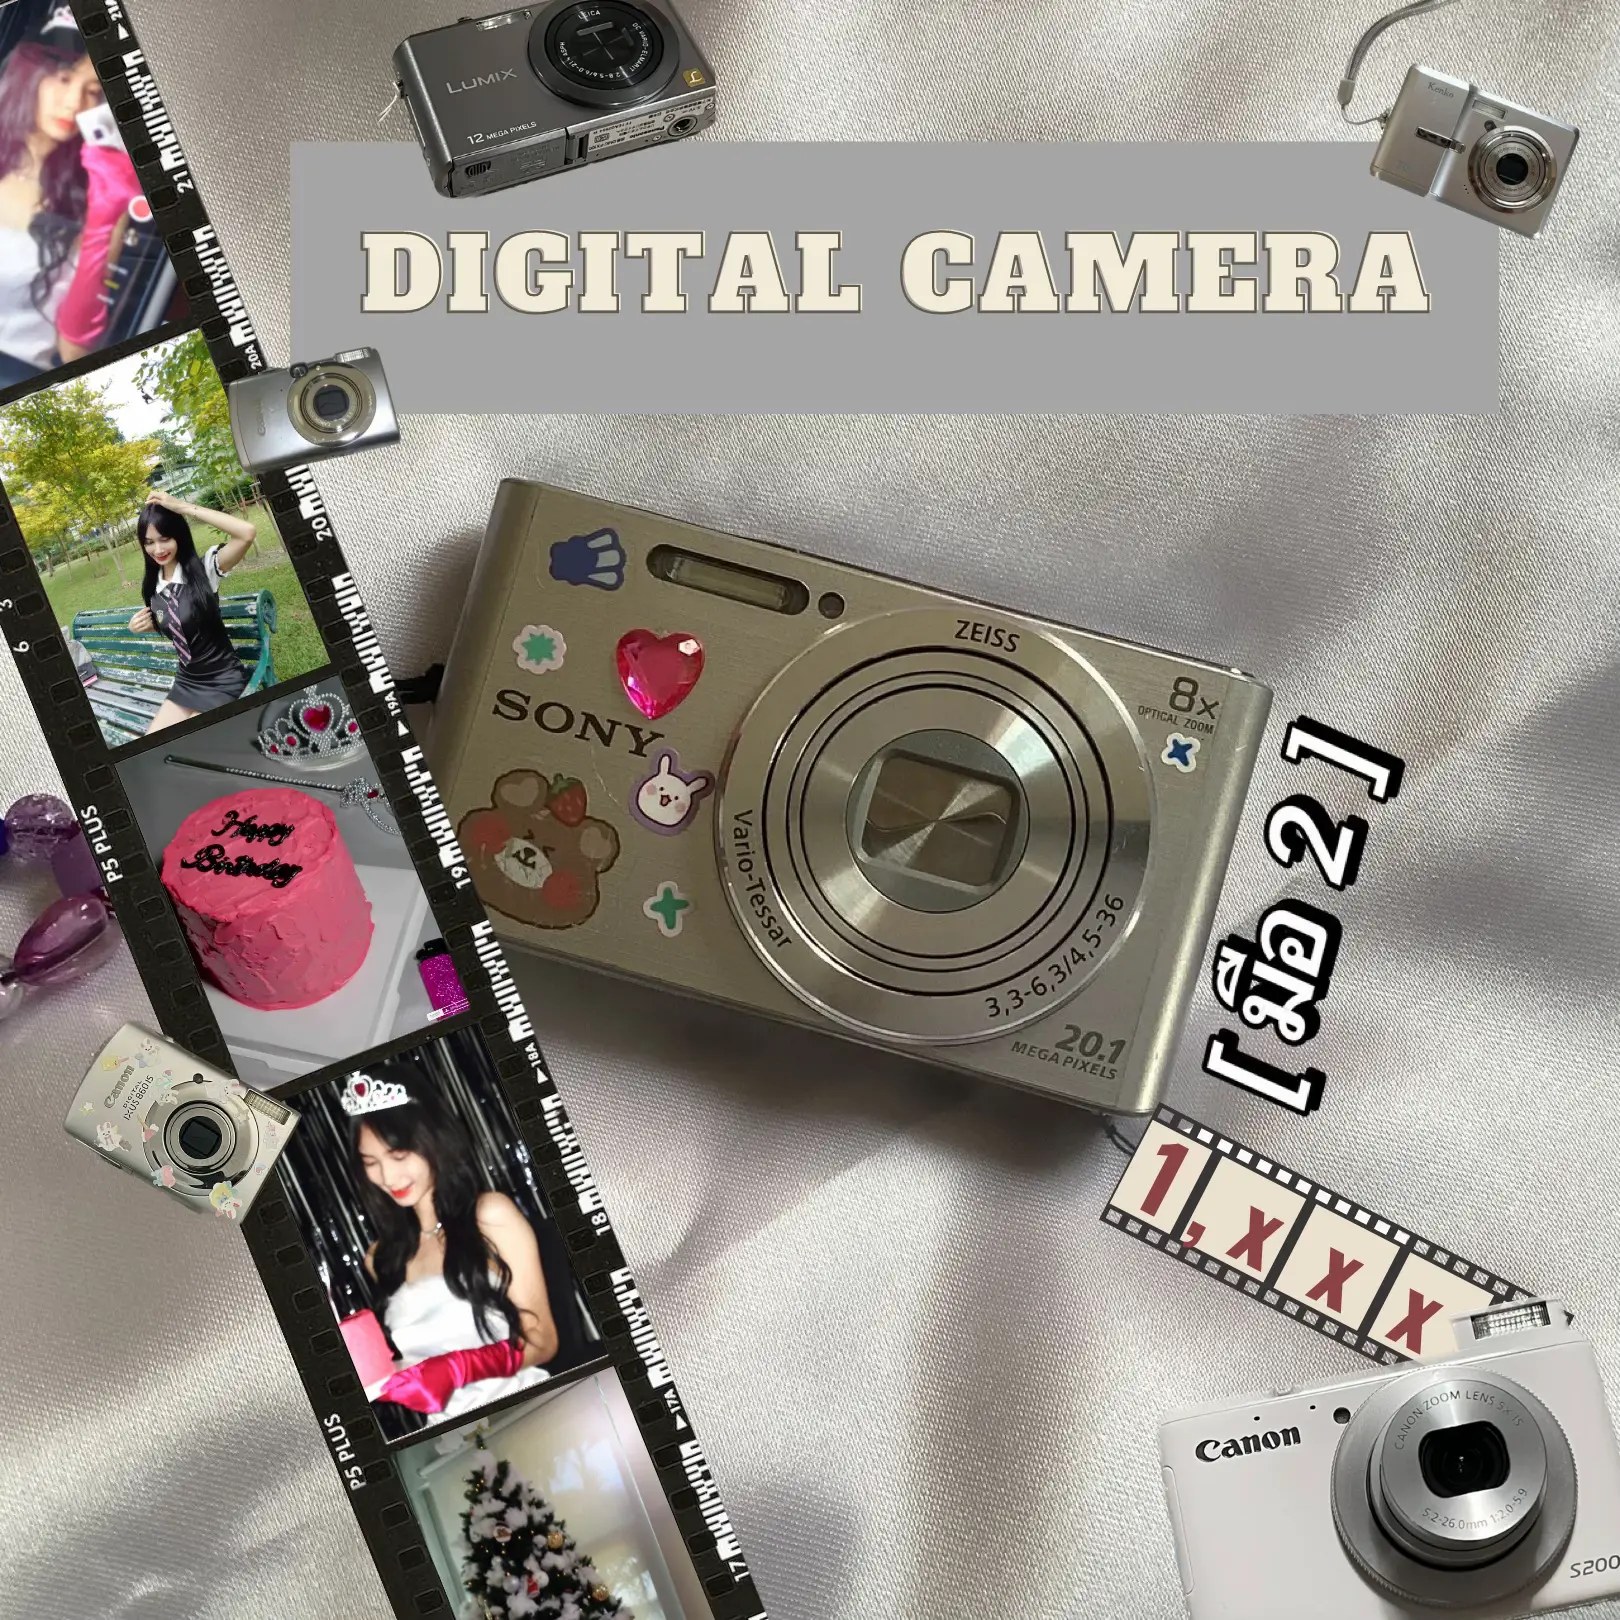 Sony DSC-W830 Digital Camera (Silver)